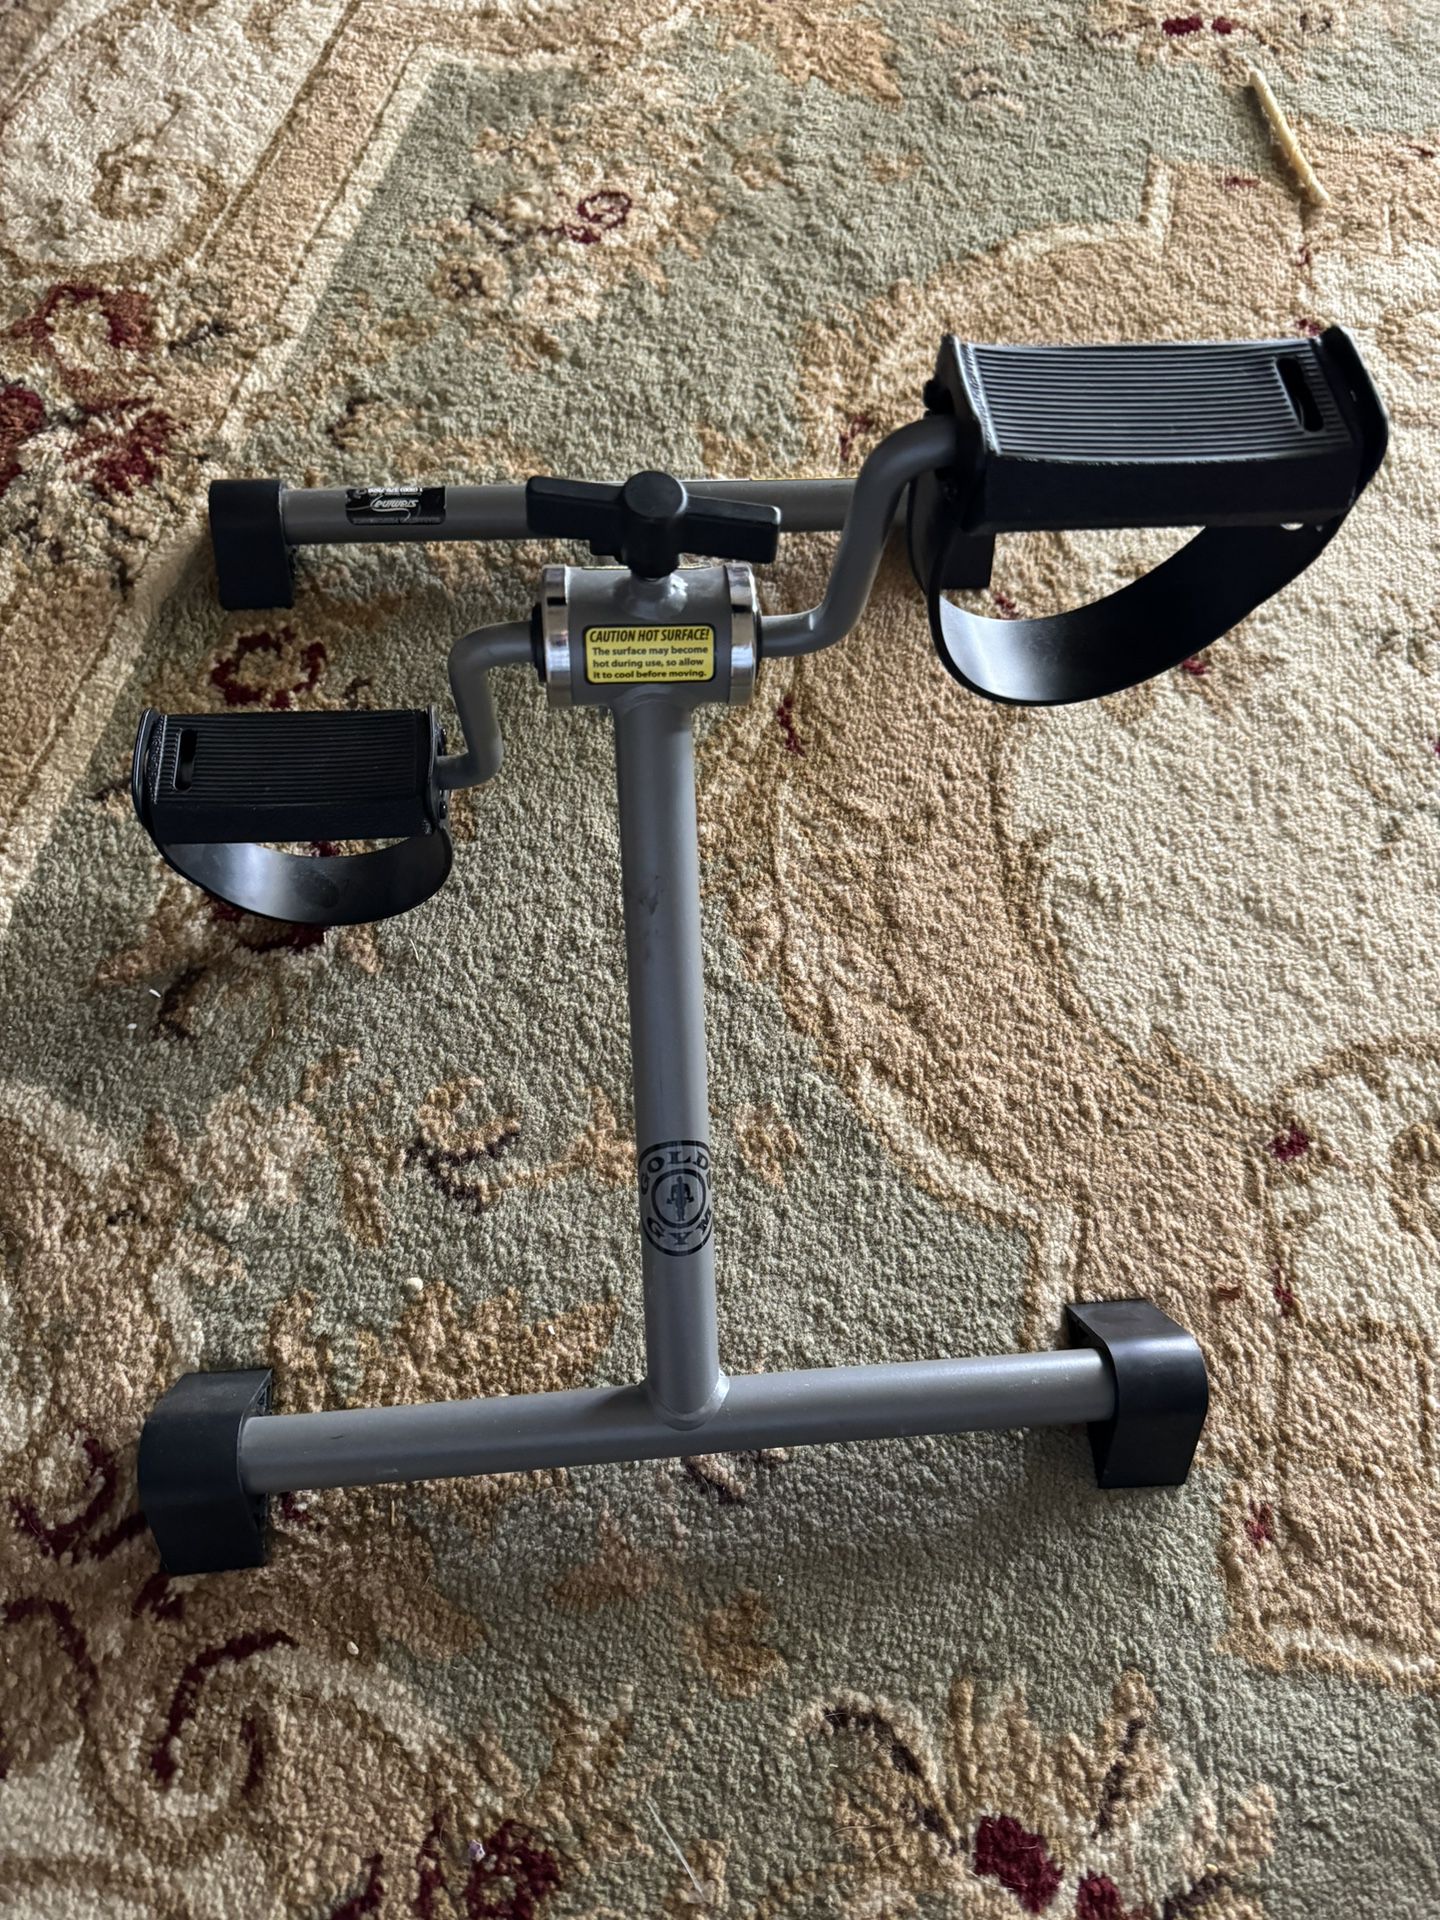 Gold Gym Mini Pedal Exerciser 